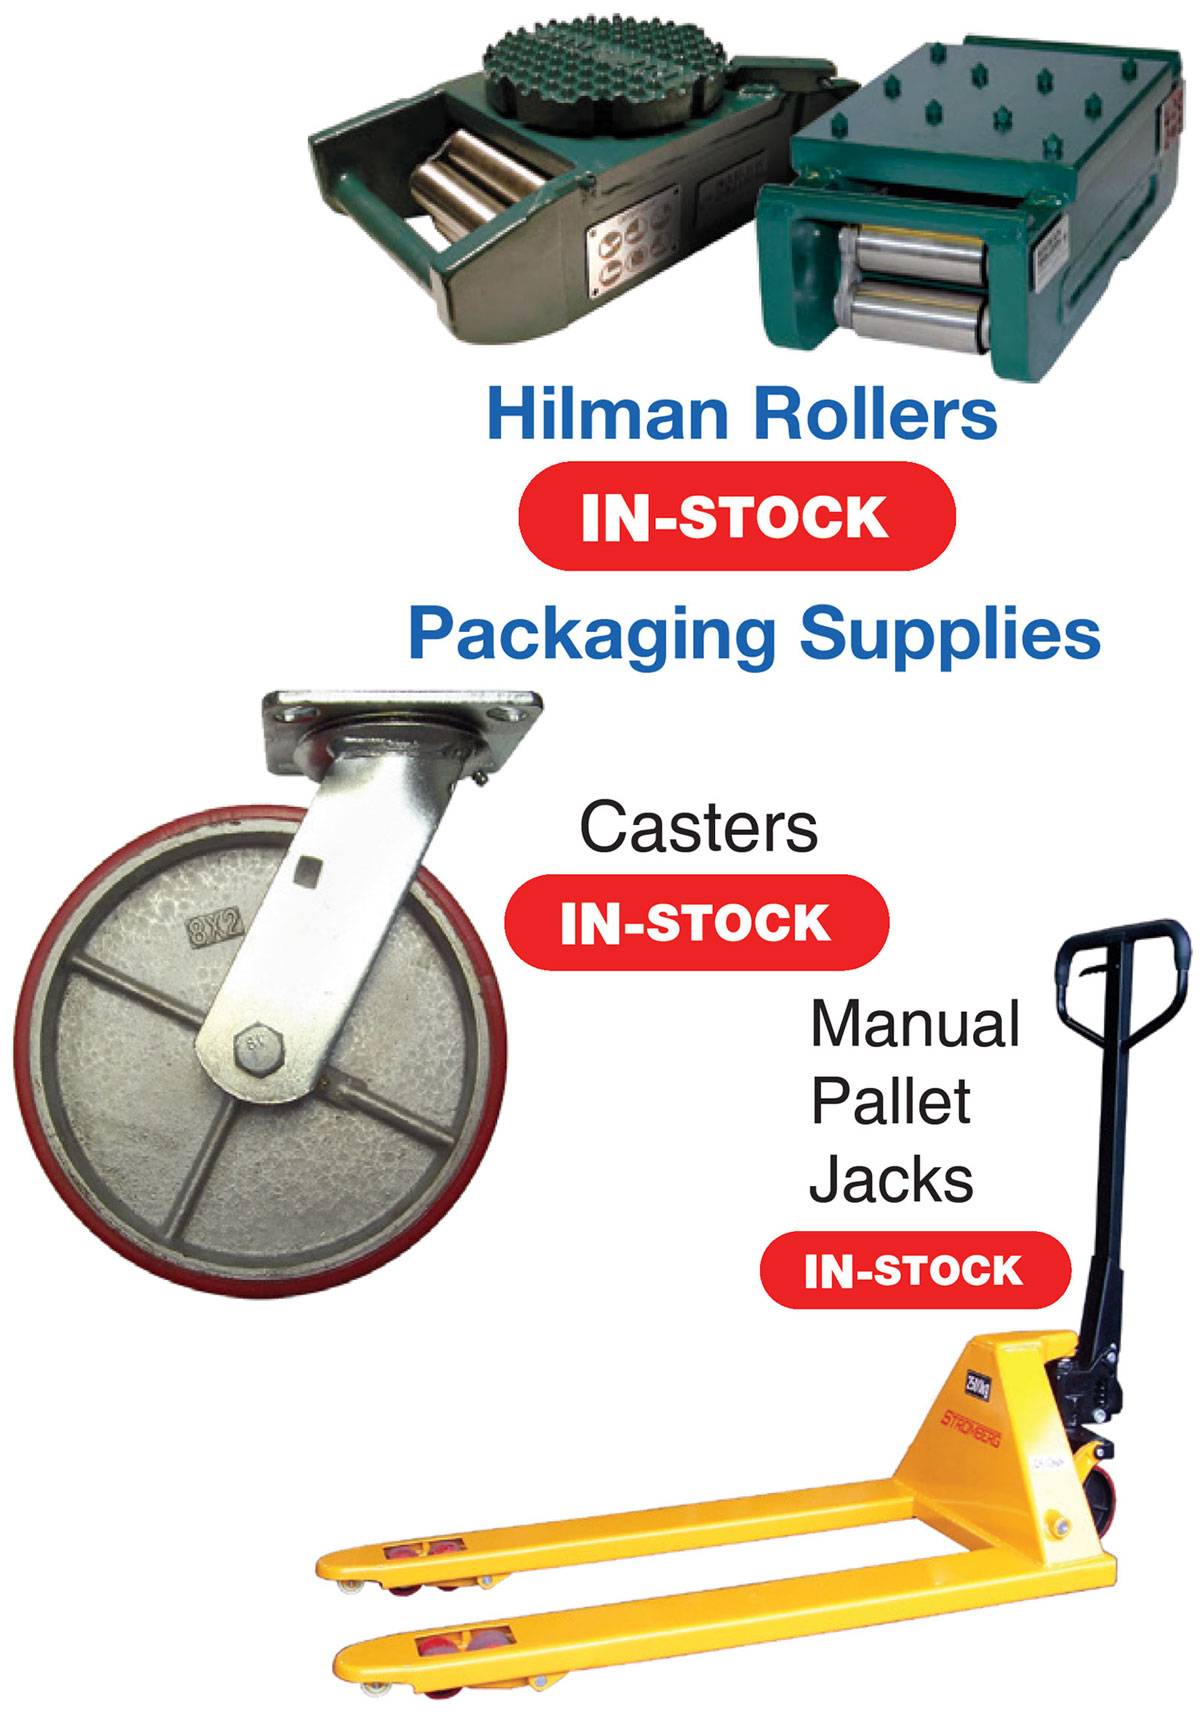 Hilman Rollers / Casters / Manual Pallet Jacks